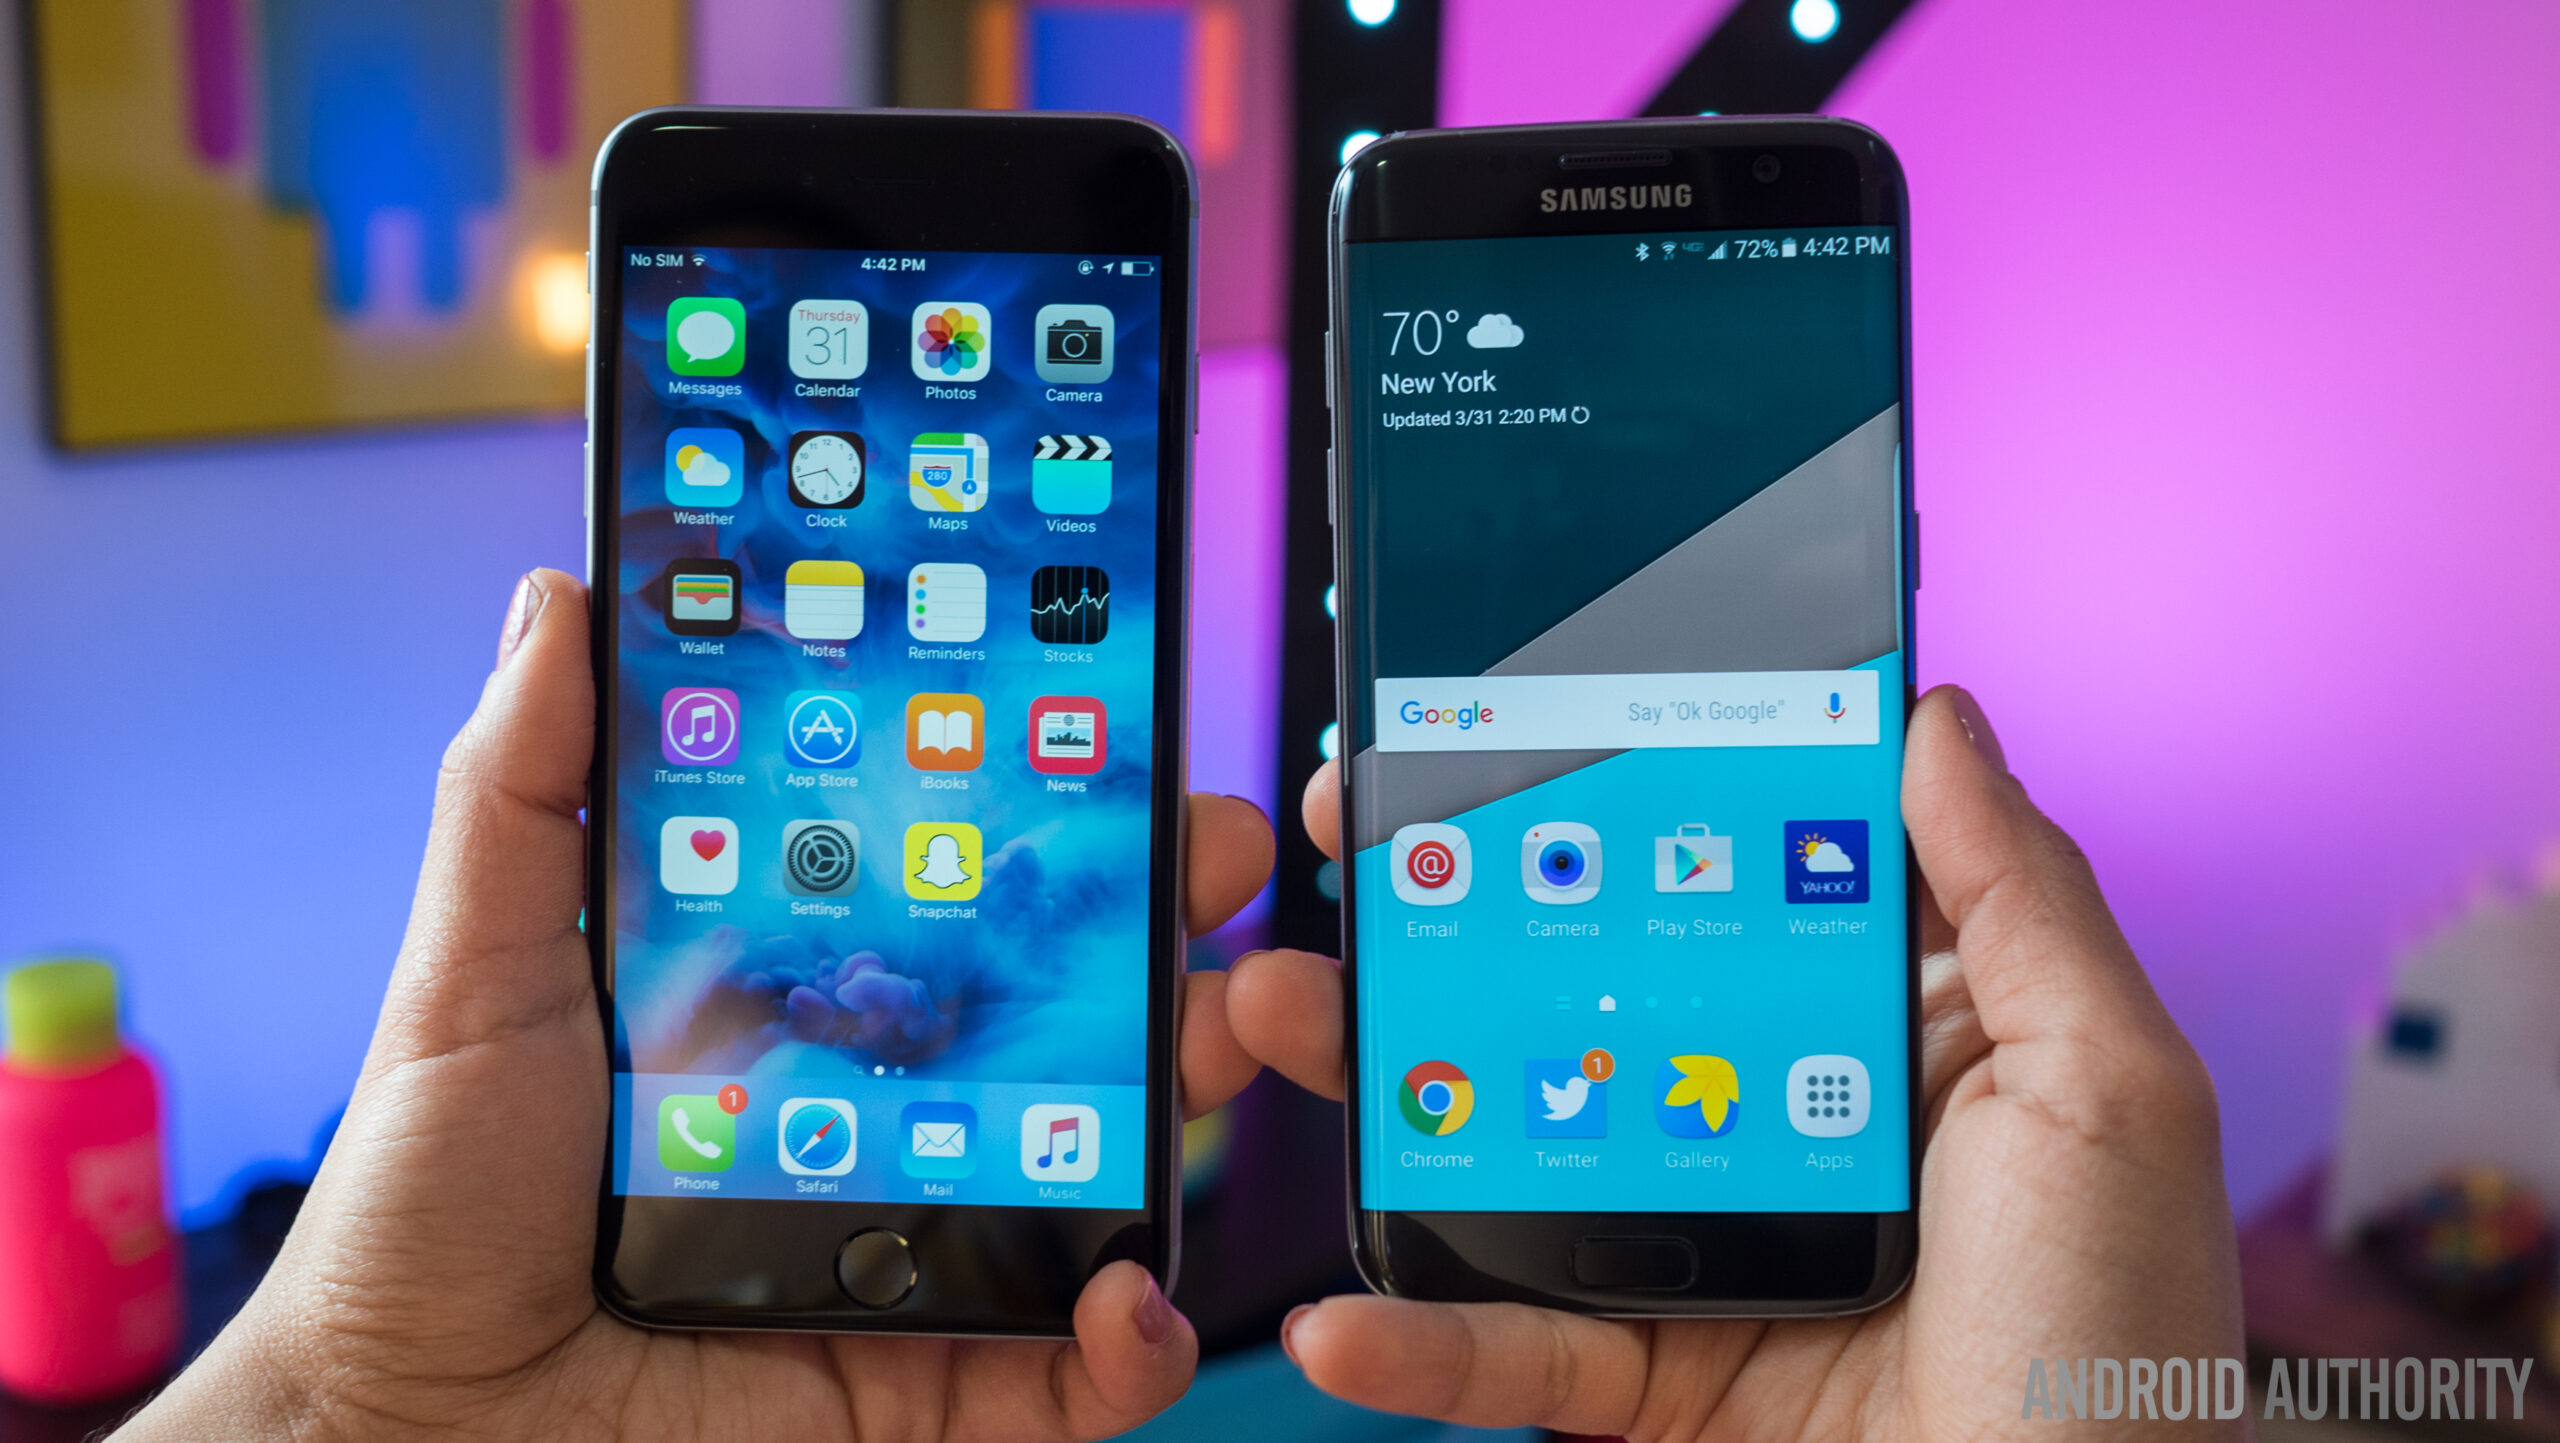 Galaxy-S7-Edge-vs-iPhone-6s-plus-15of18